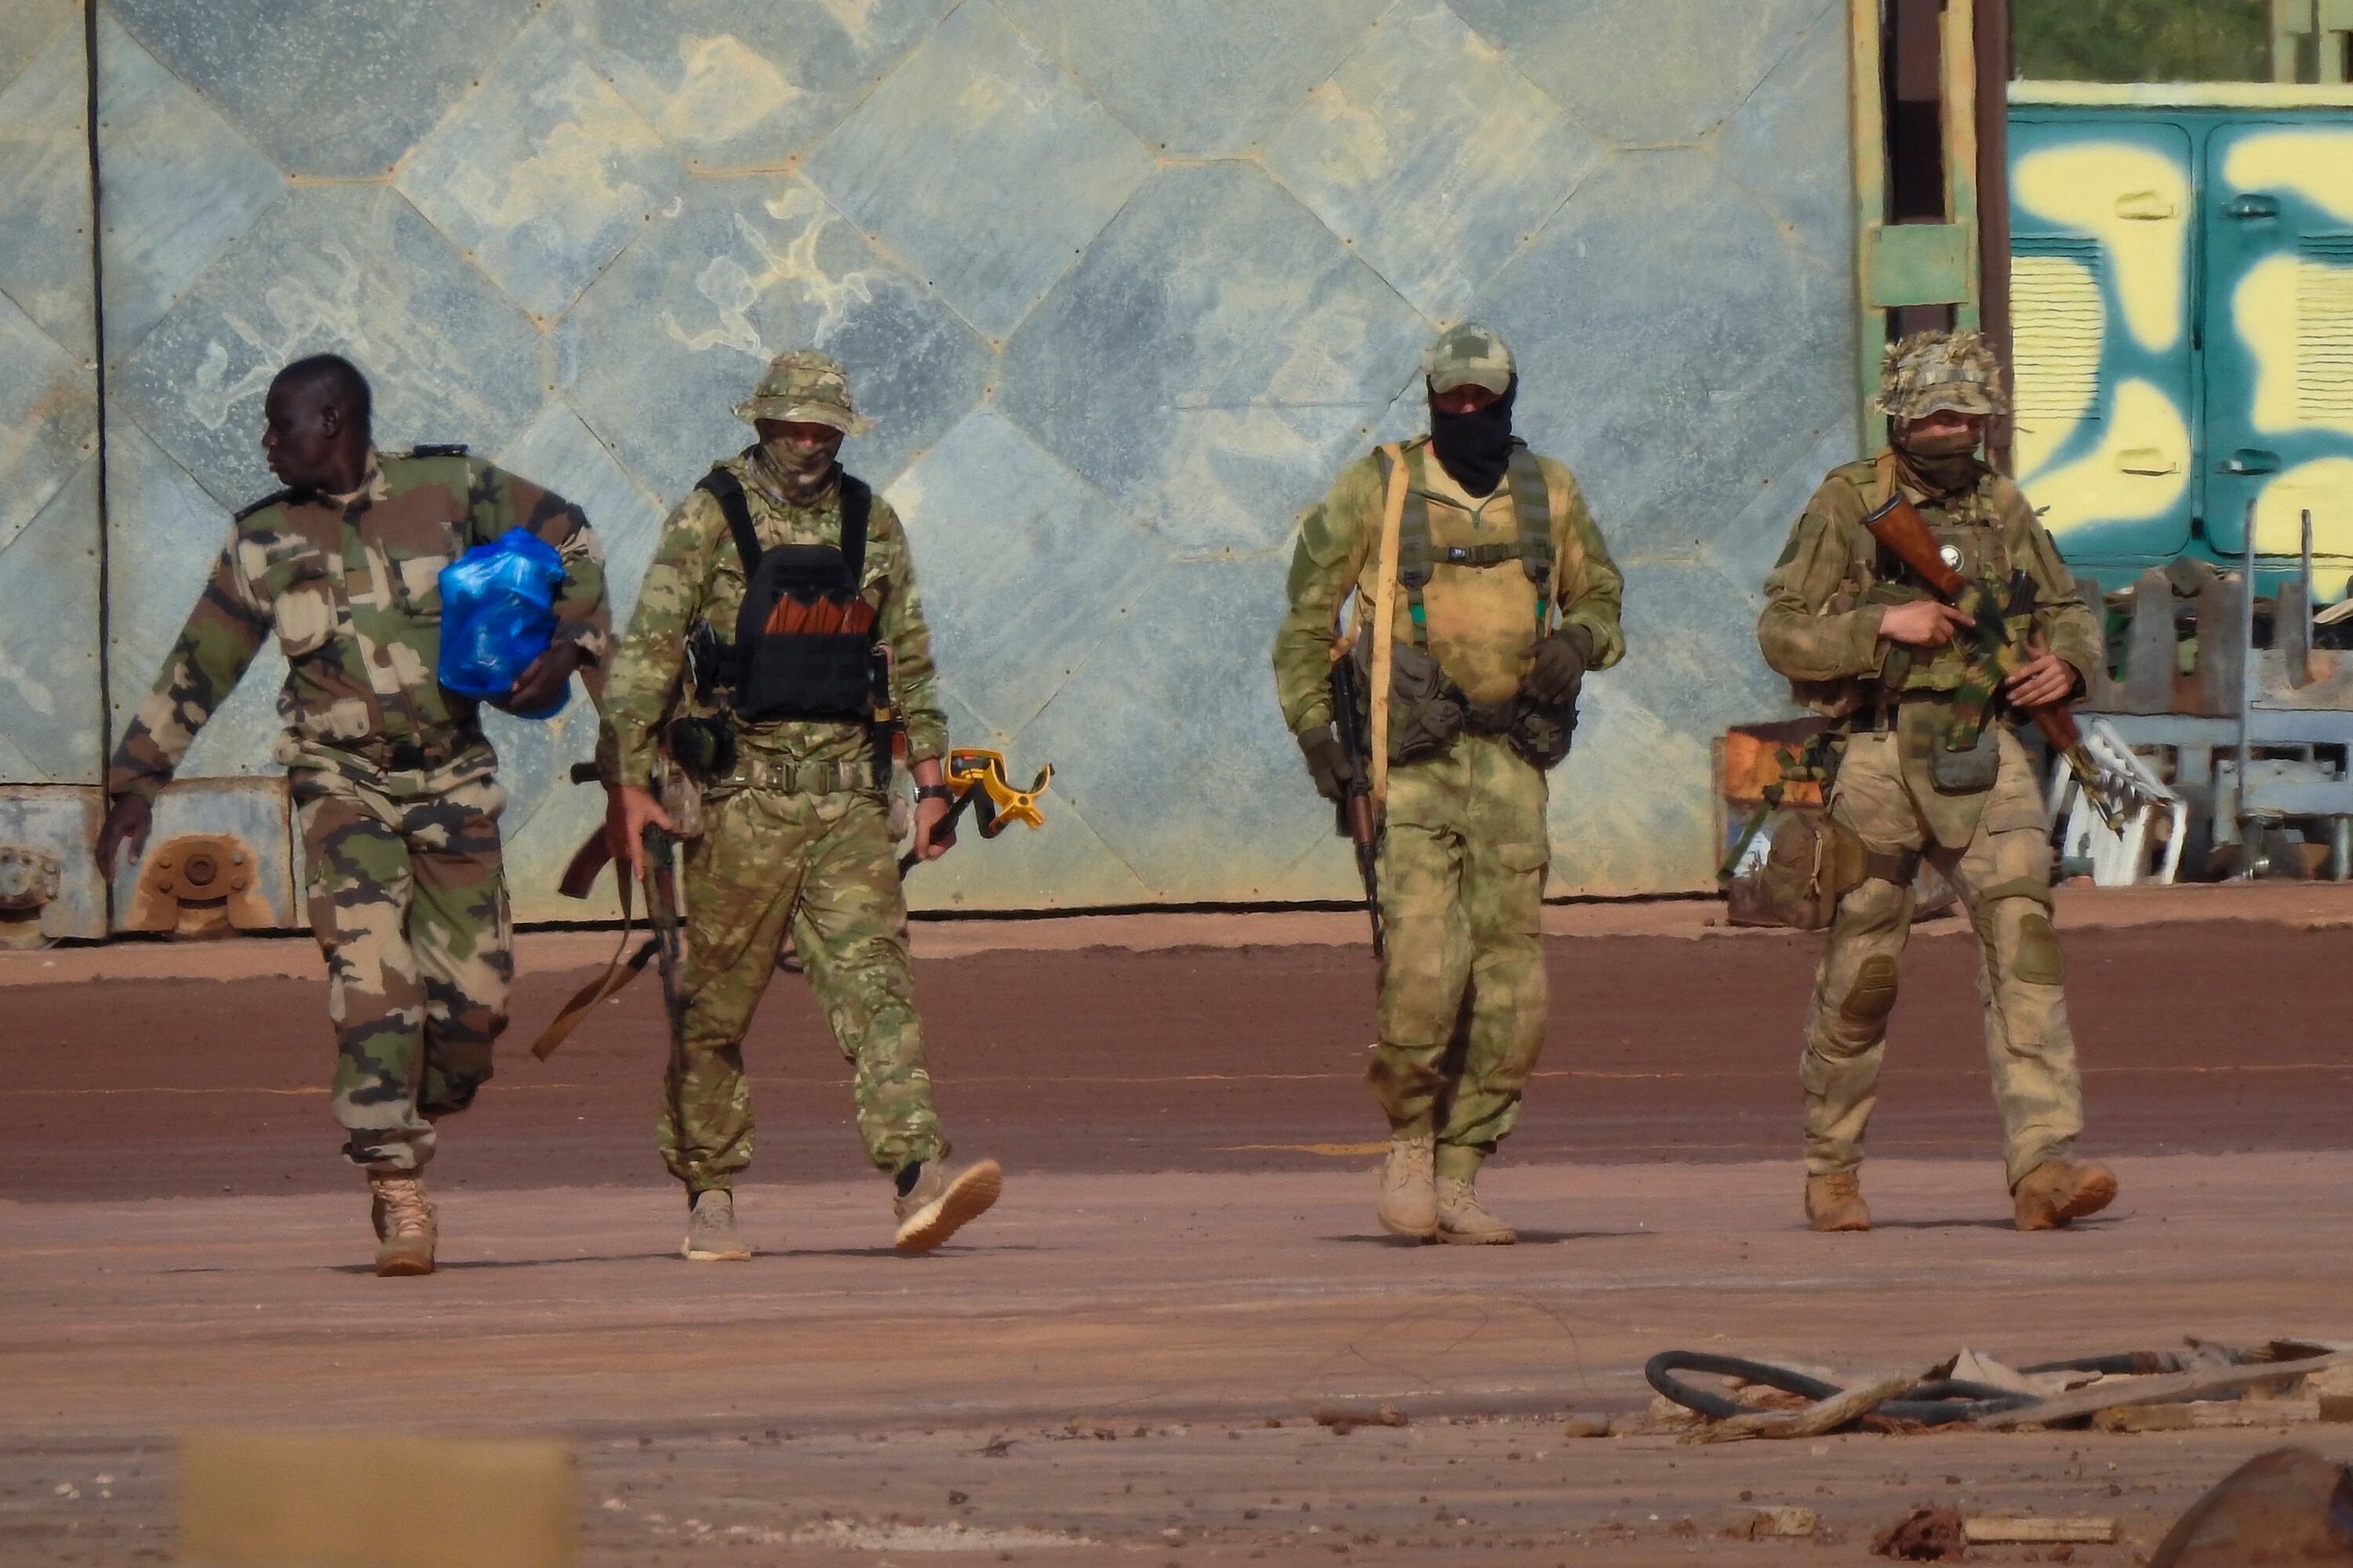 Wagner mercenaries helping to kill civilians in Mali, say human rights groups